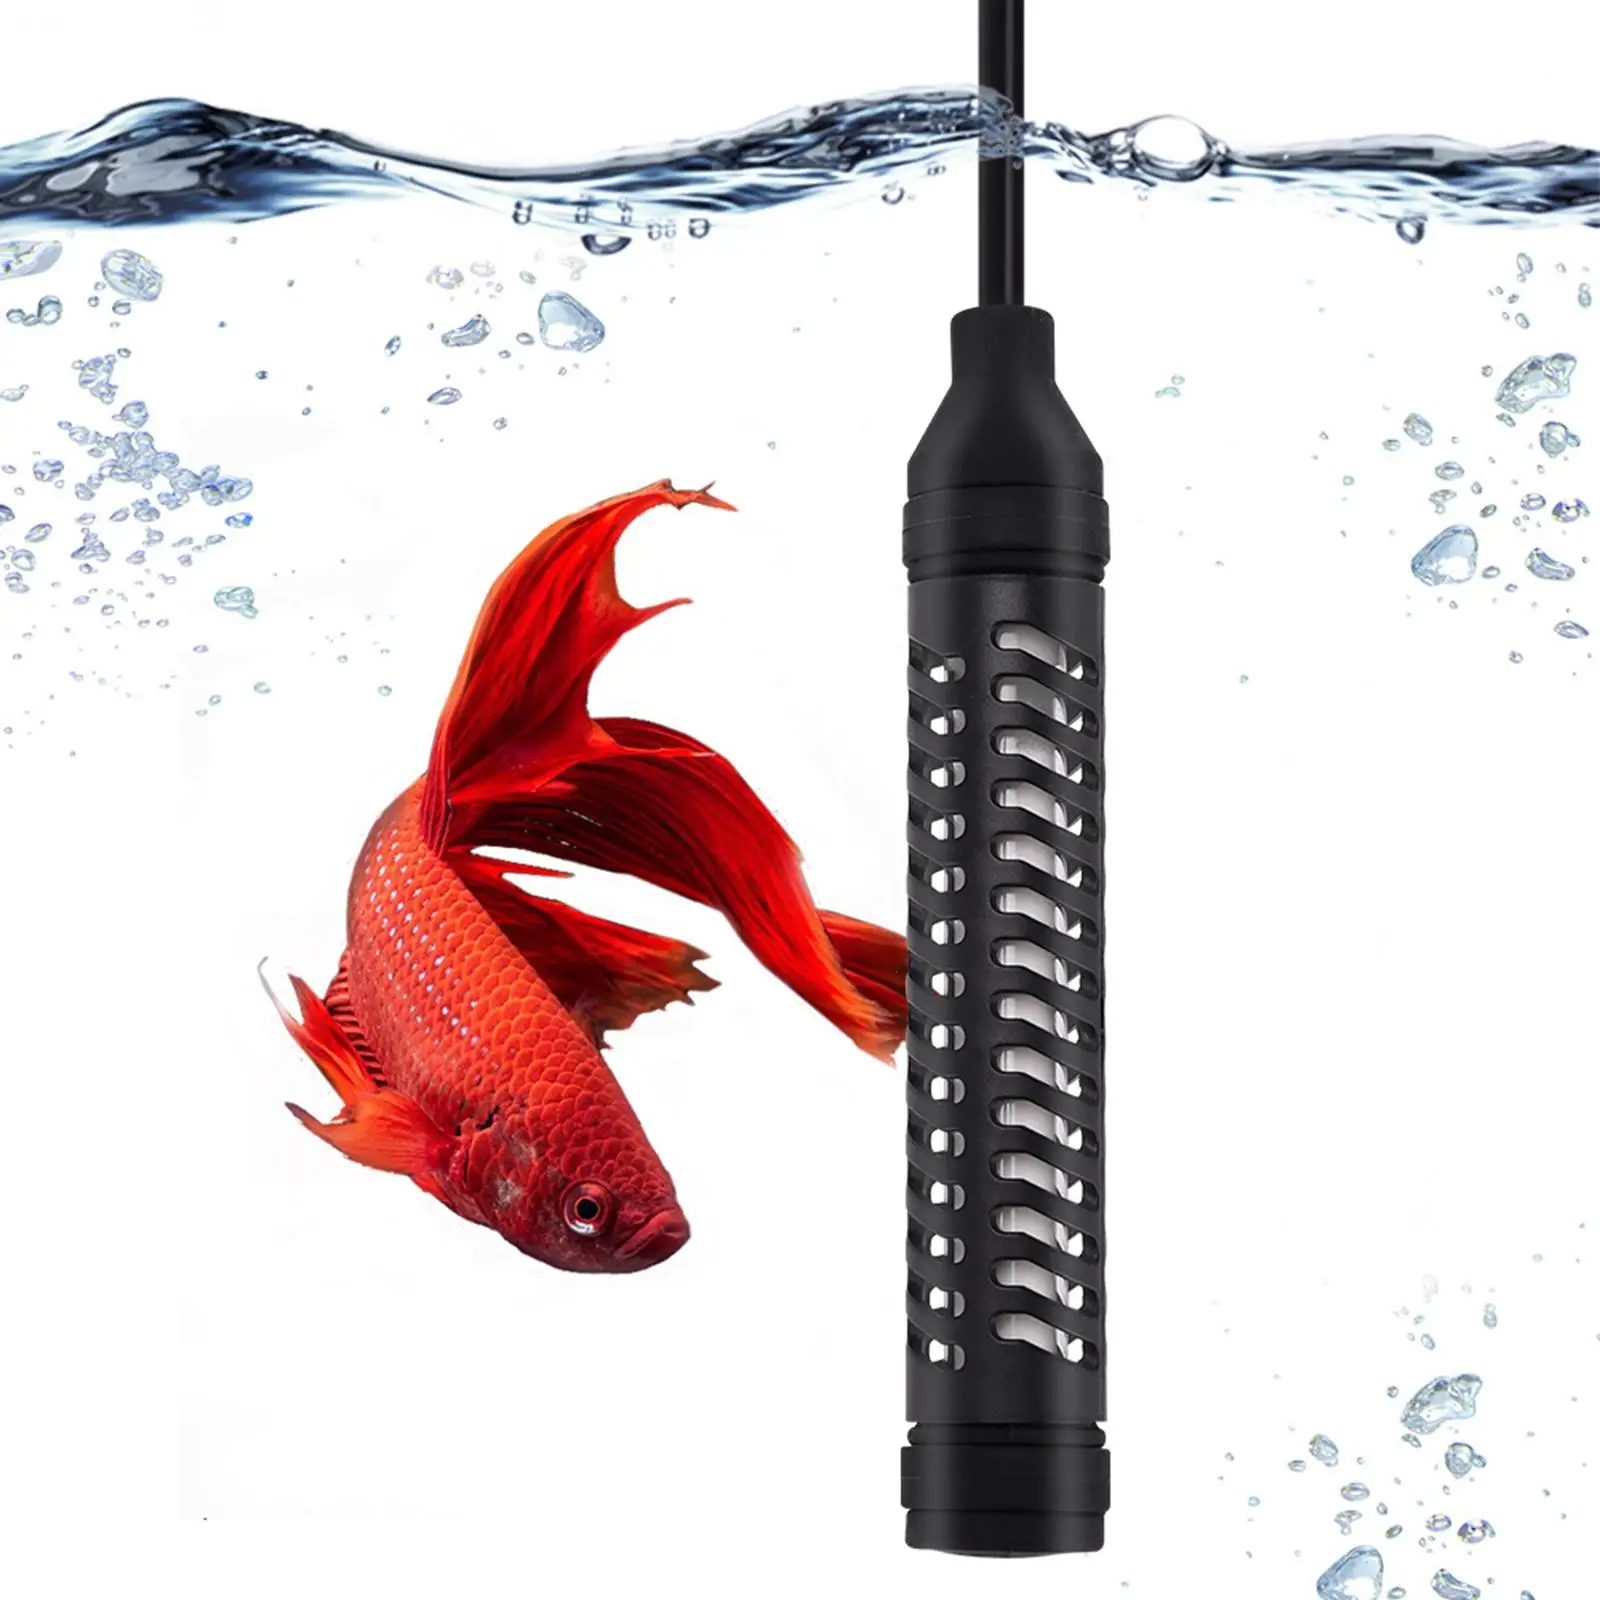 Aquarium Fish Tank Heater Heat Rod Submersible Thermostat Adjustable Temperature Automatic Digital Waterproof for Pool Fish